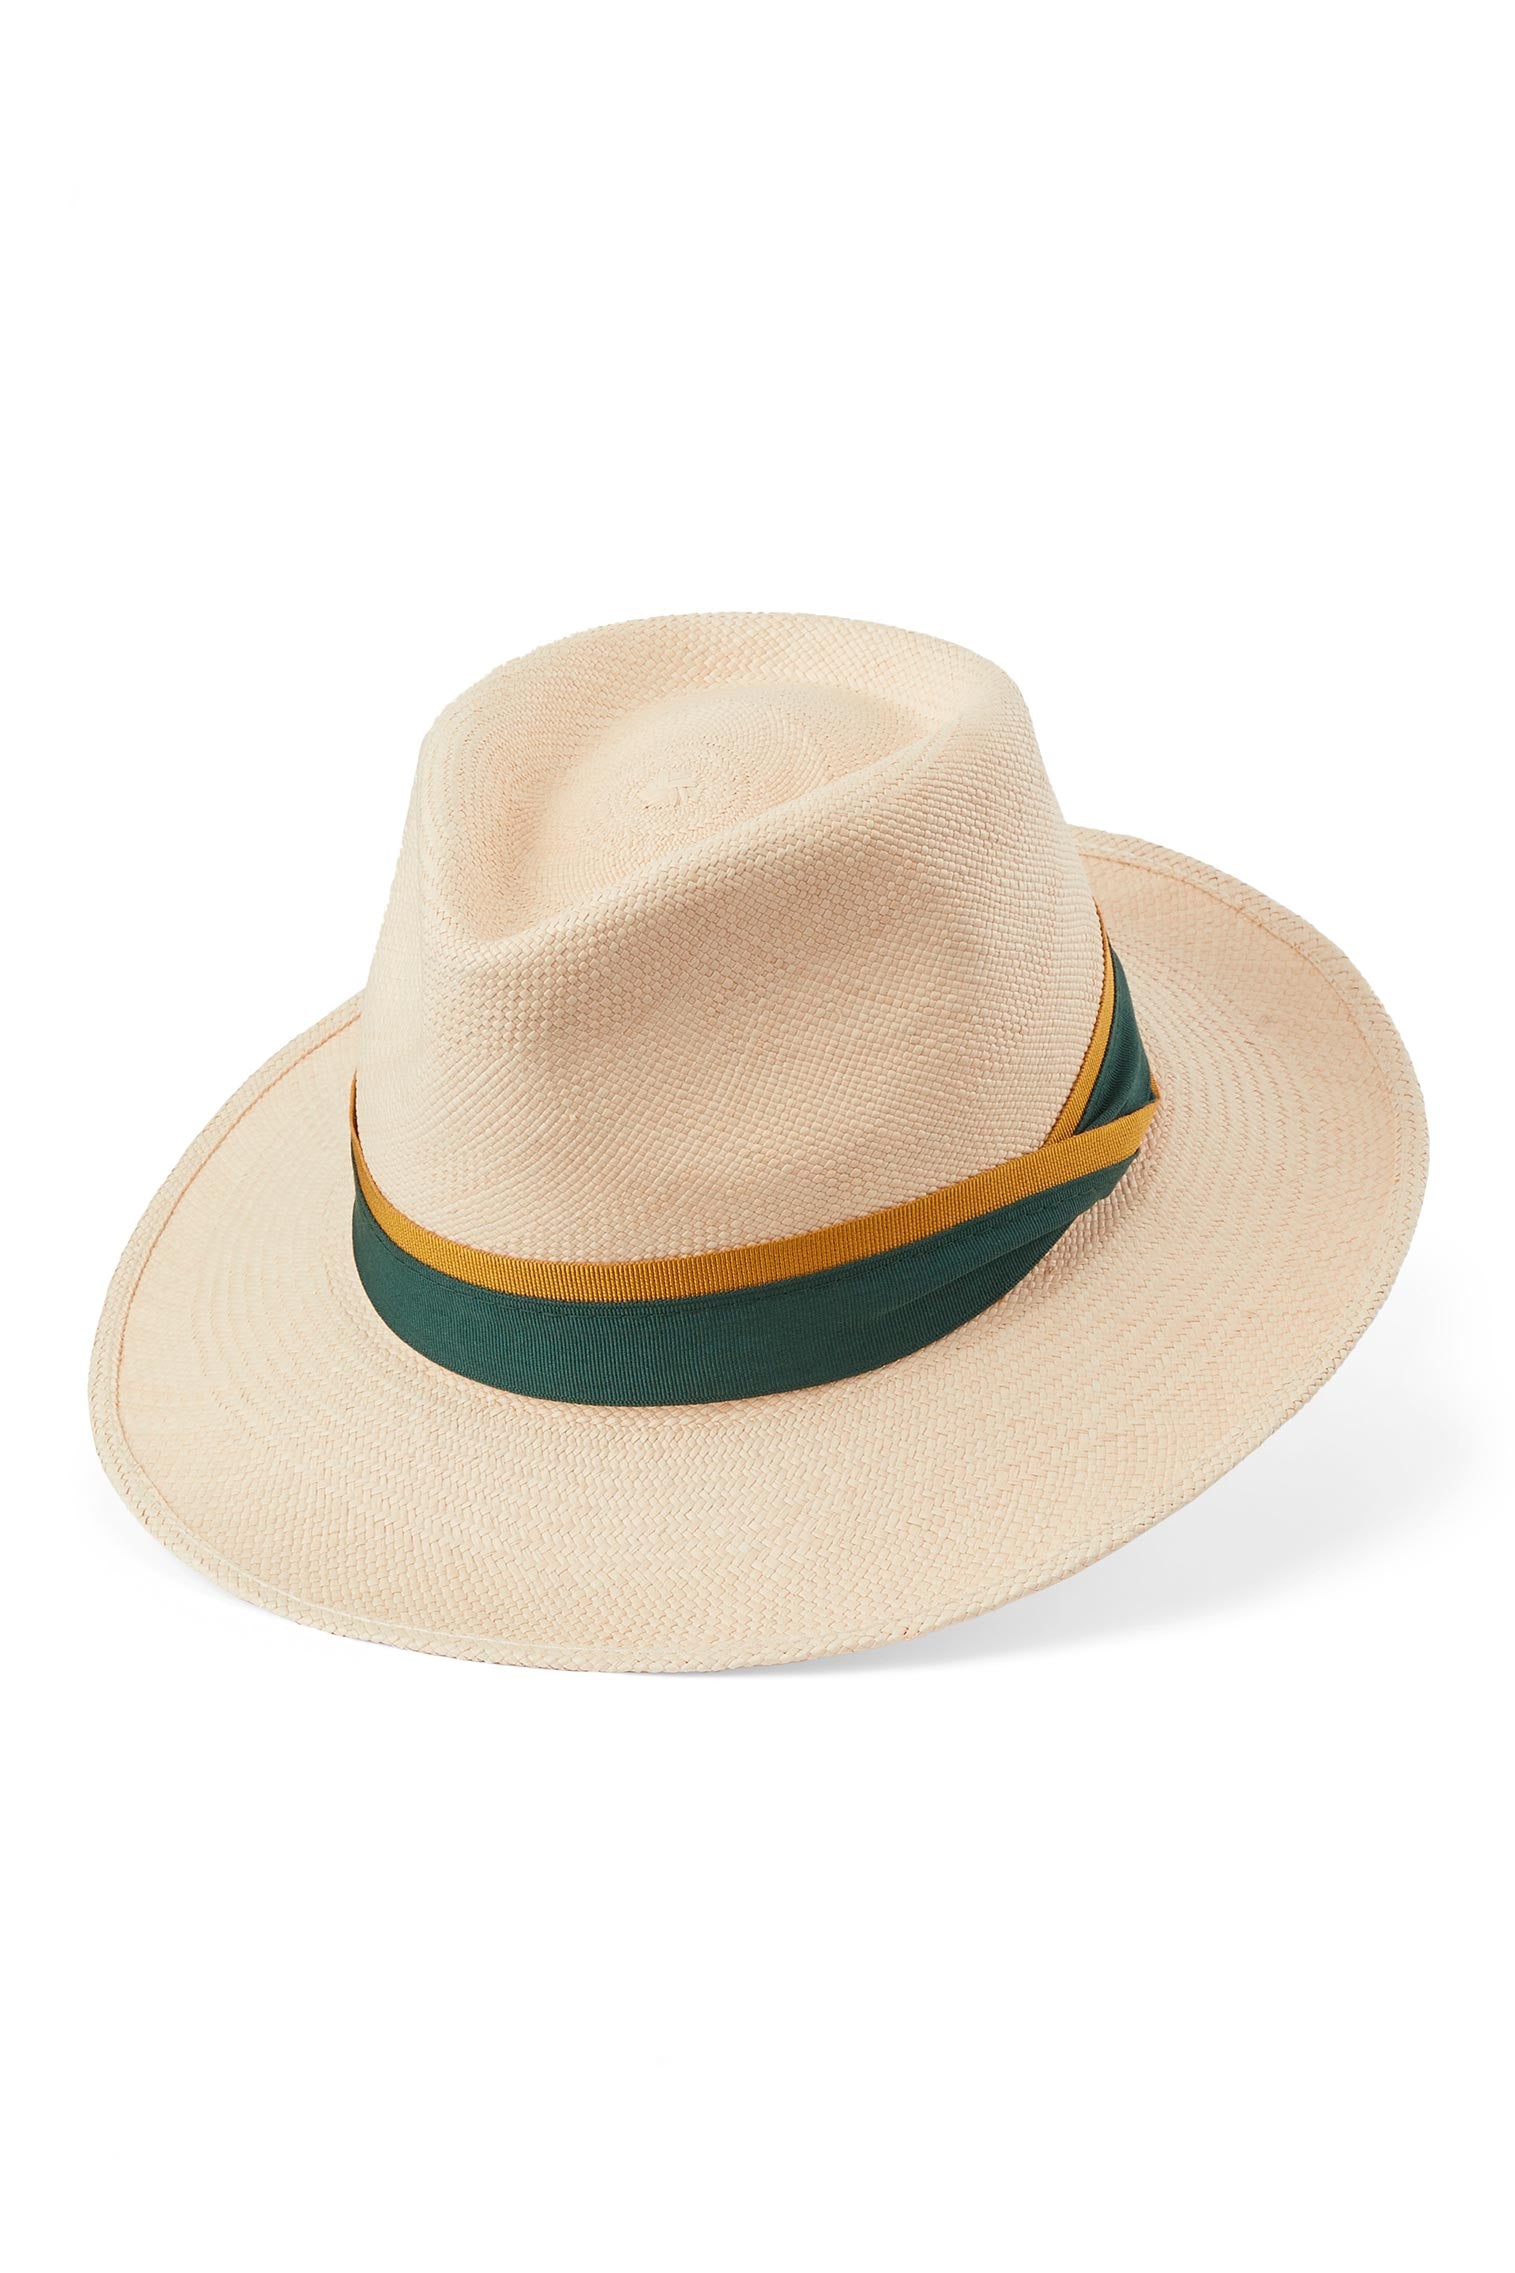 Highgrove Panama - Best Selling Hats - Lock & Co. Hatters London UK